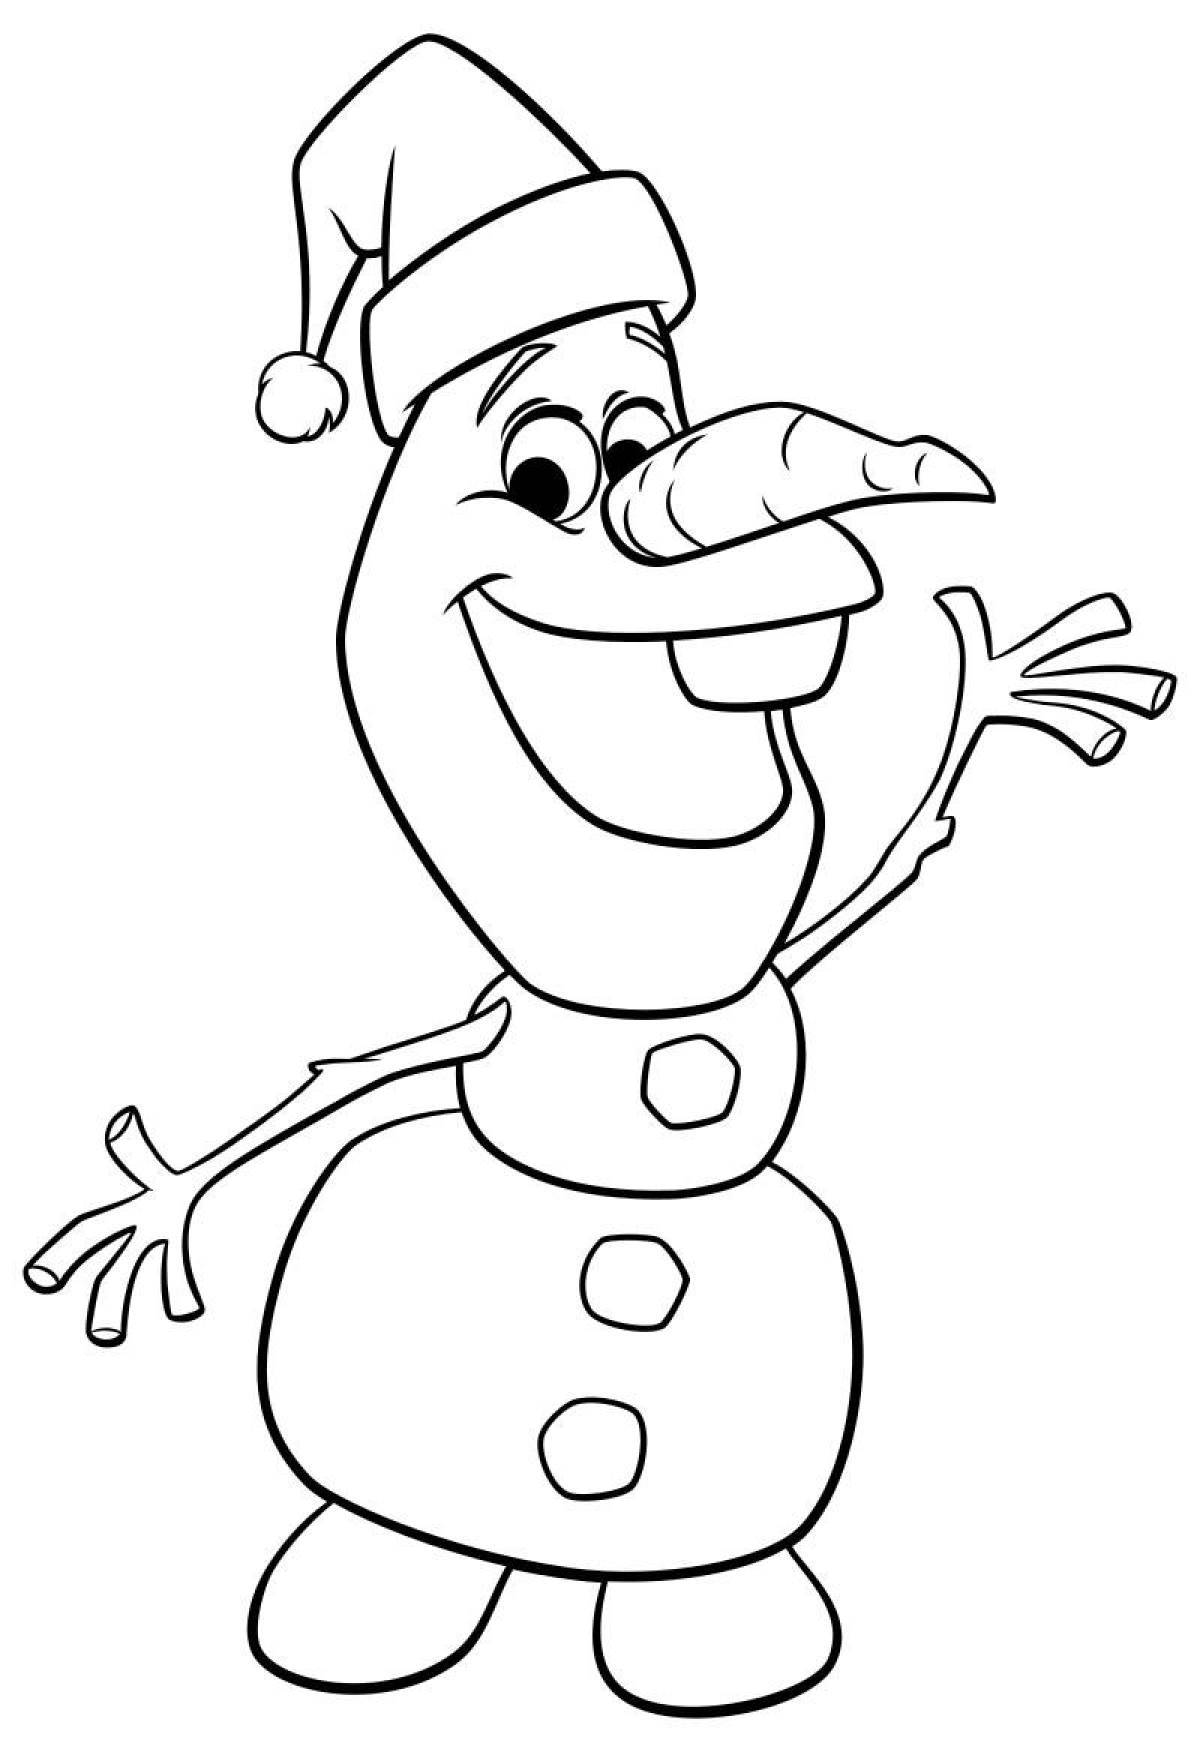 New Year's cartoon. Olaf